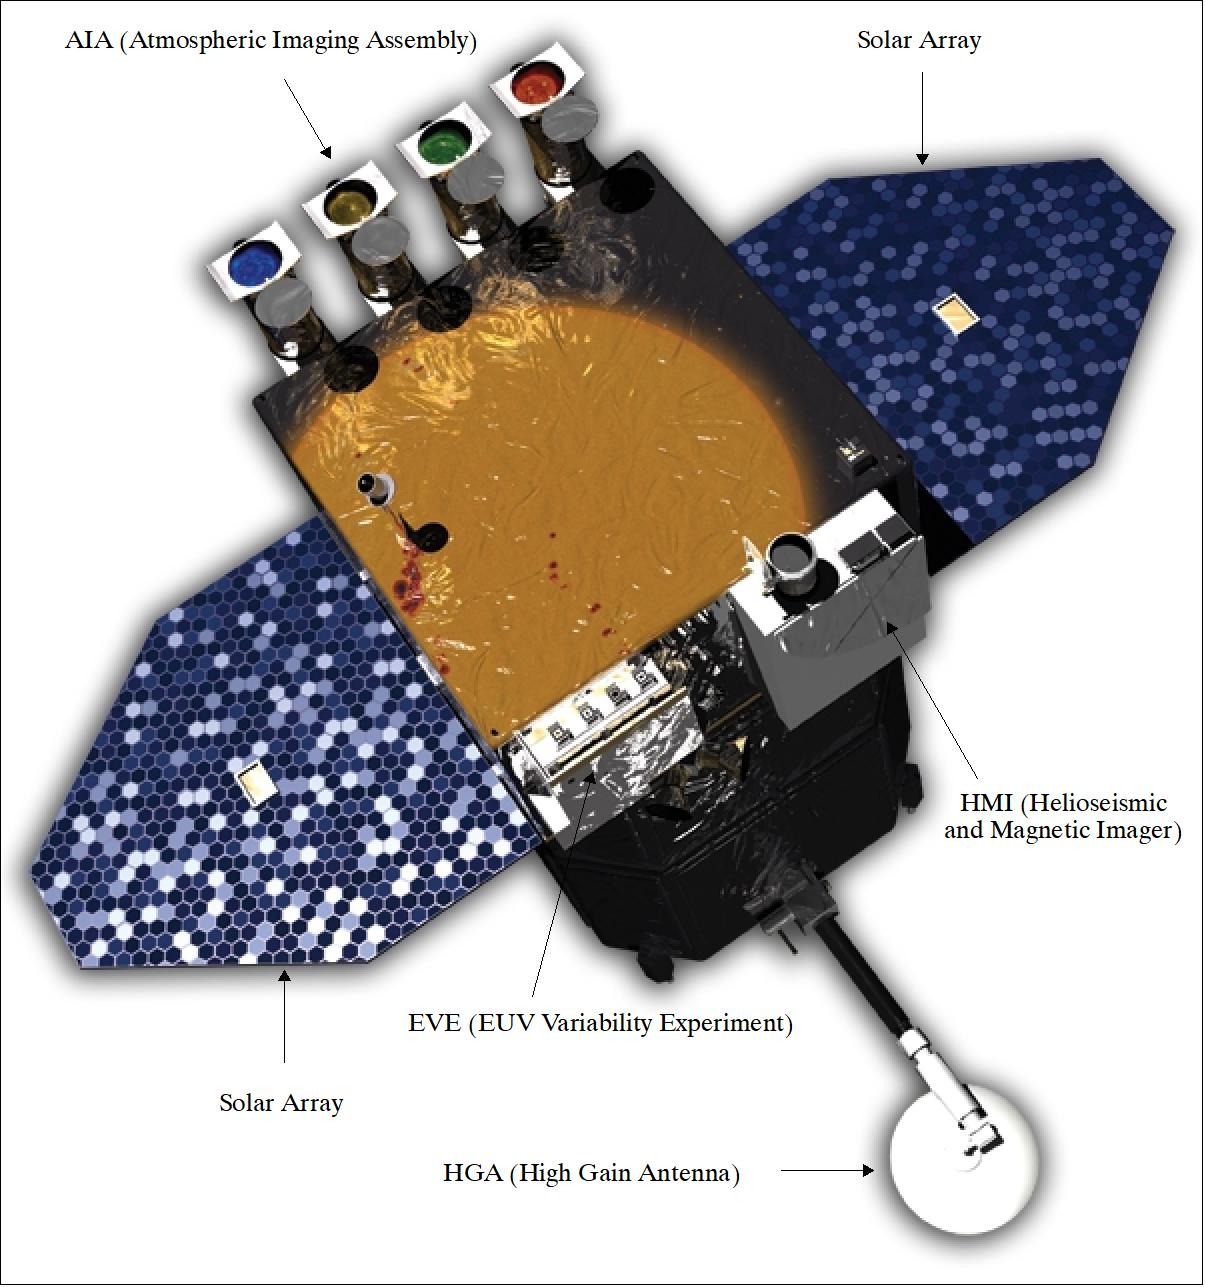 Figure 2: Top view of the SDO spacecraft (image credit: NASA)